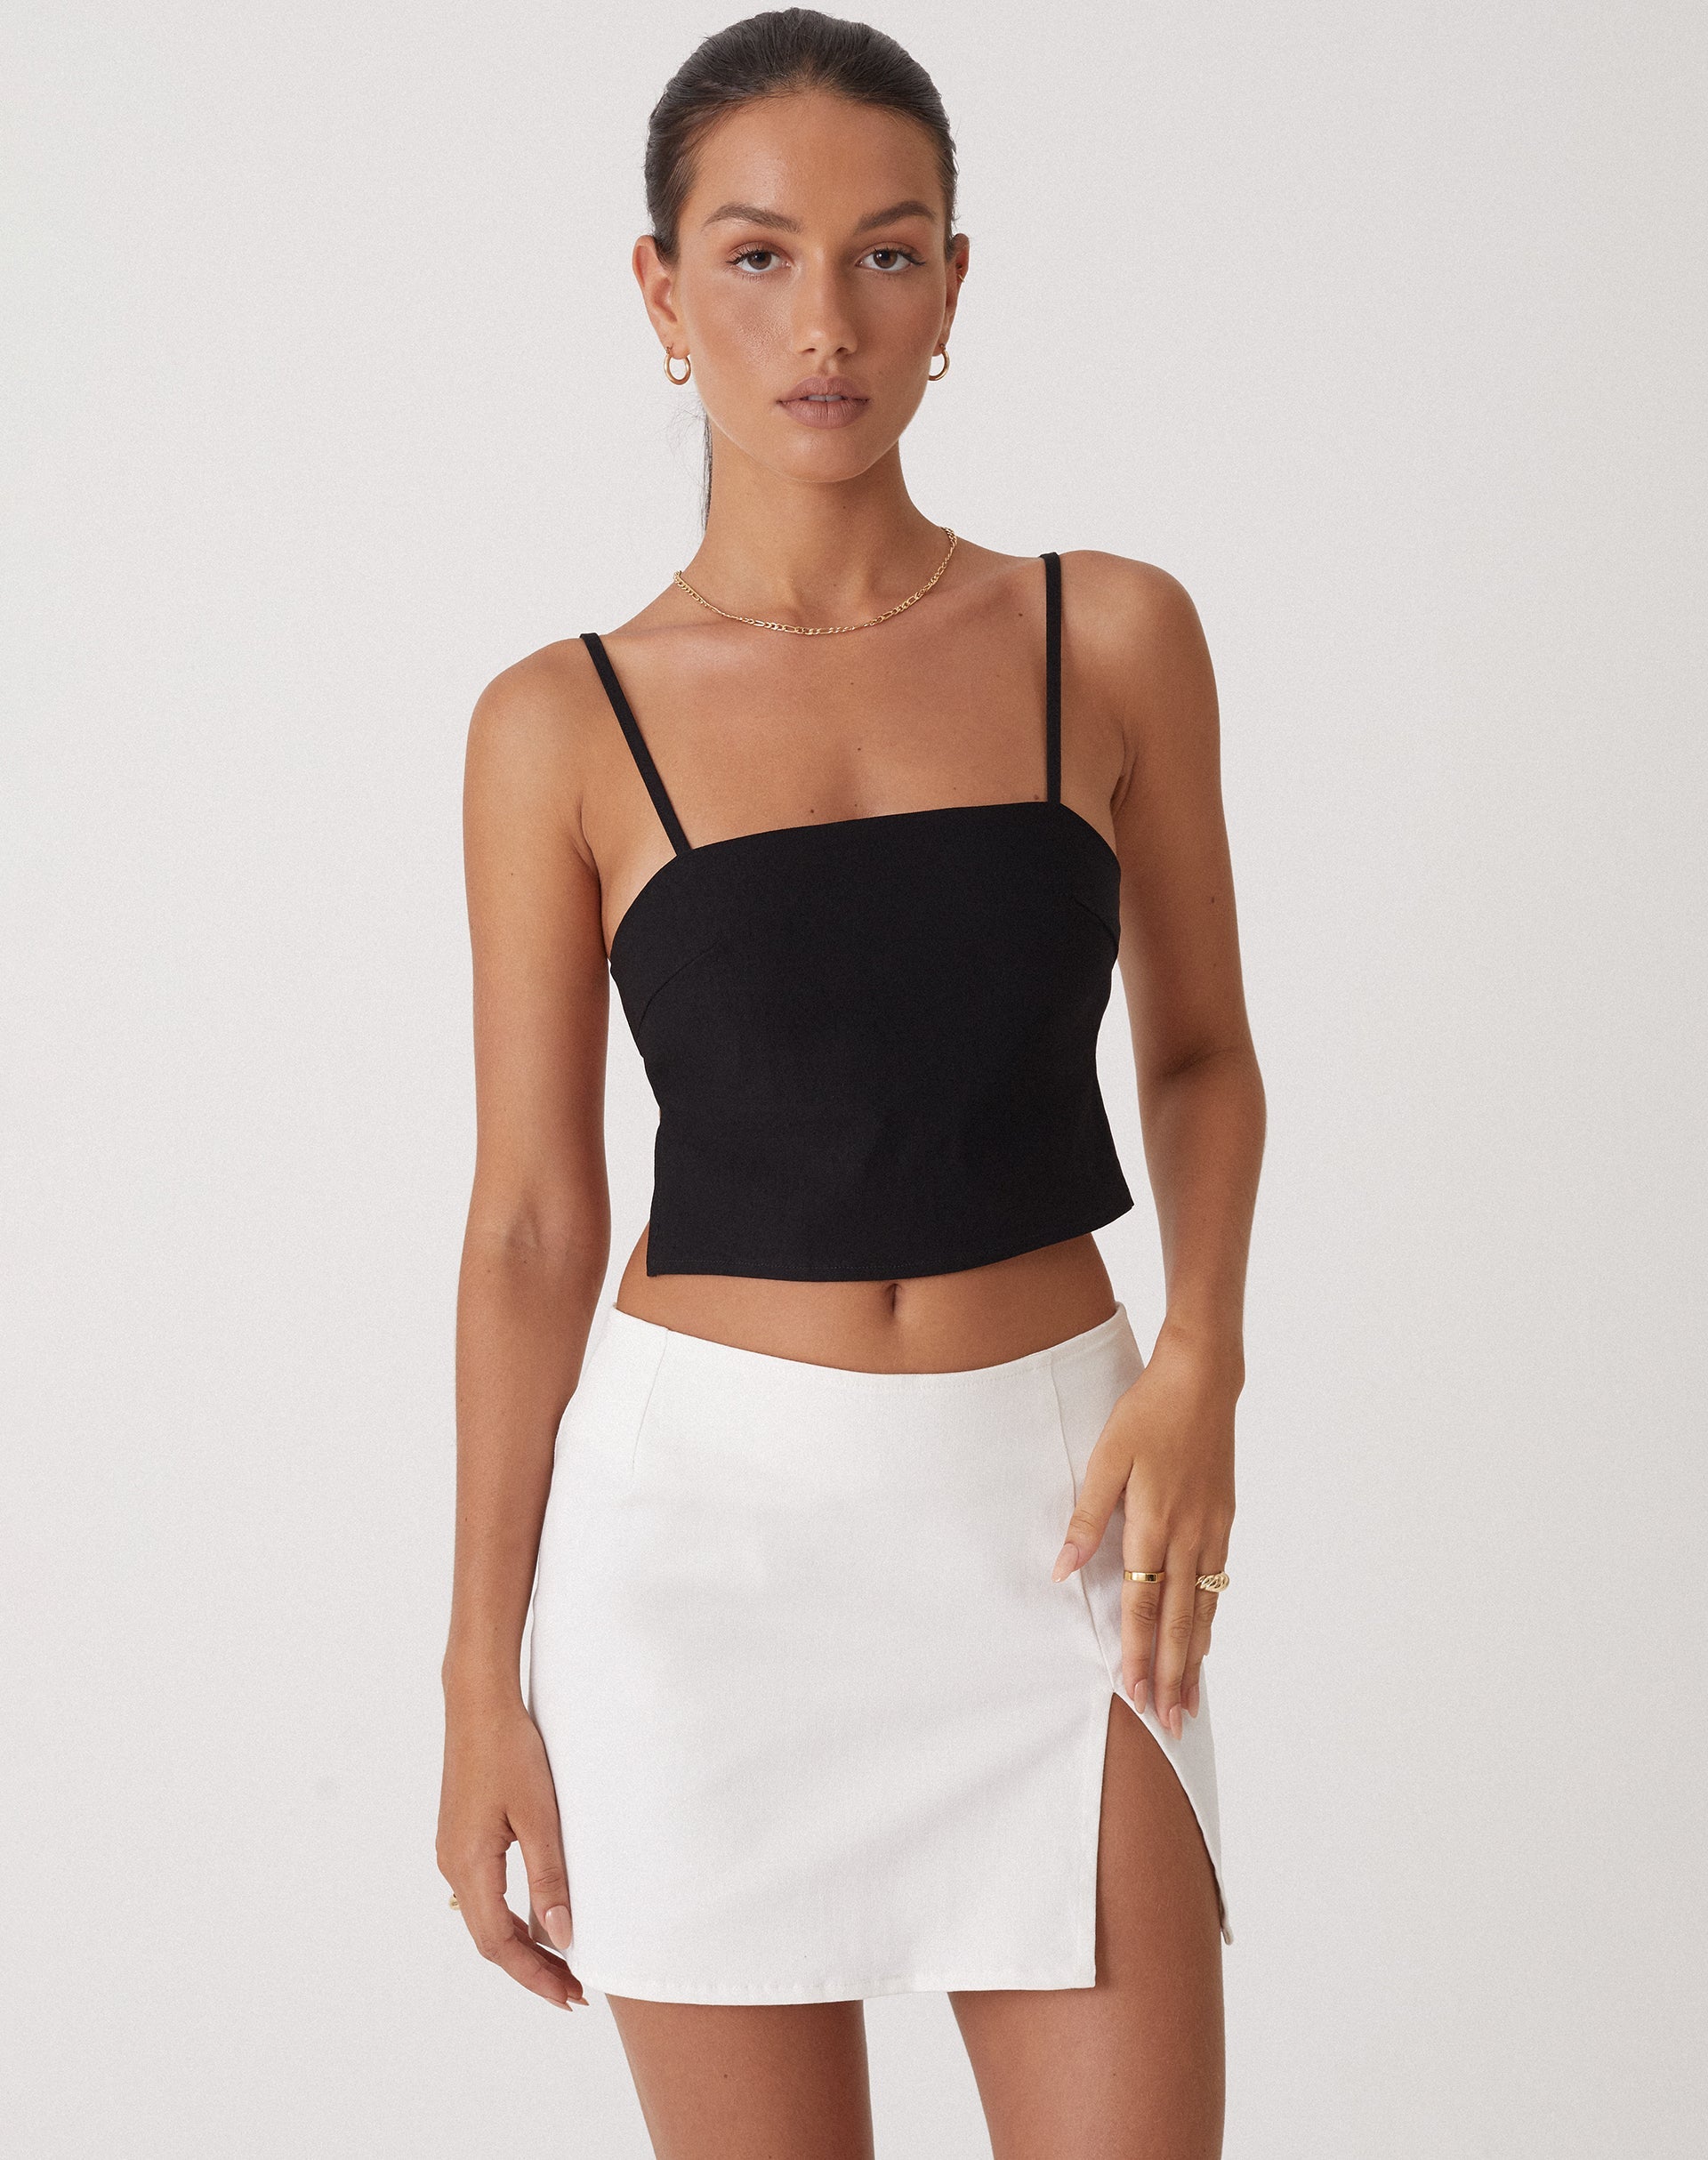 Image of MOTEL X OLIVIA NEILL Pelma Mini Skirt in Twill White